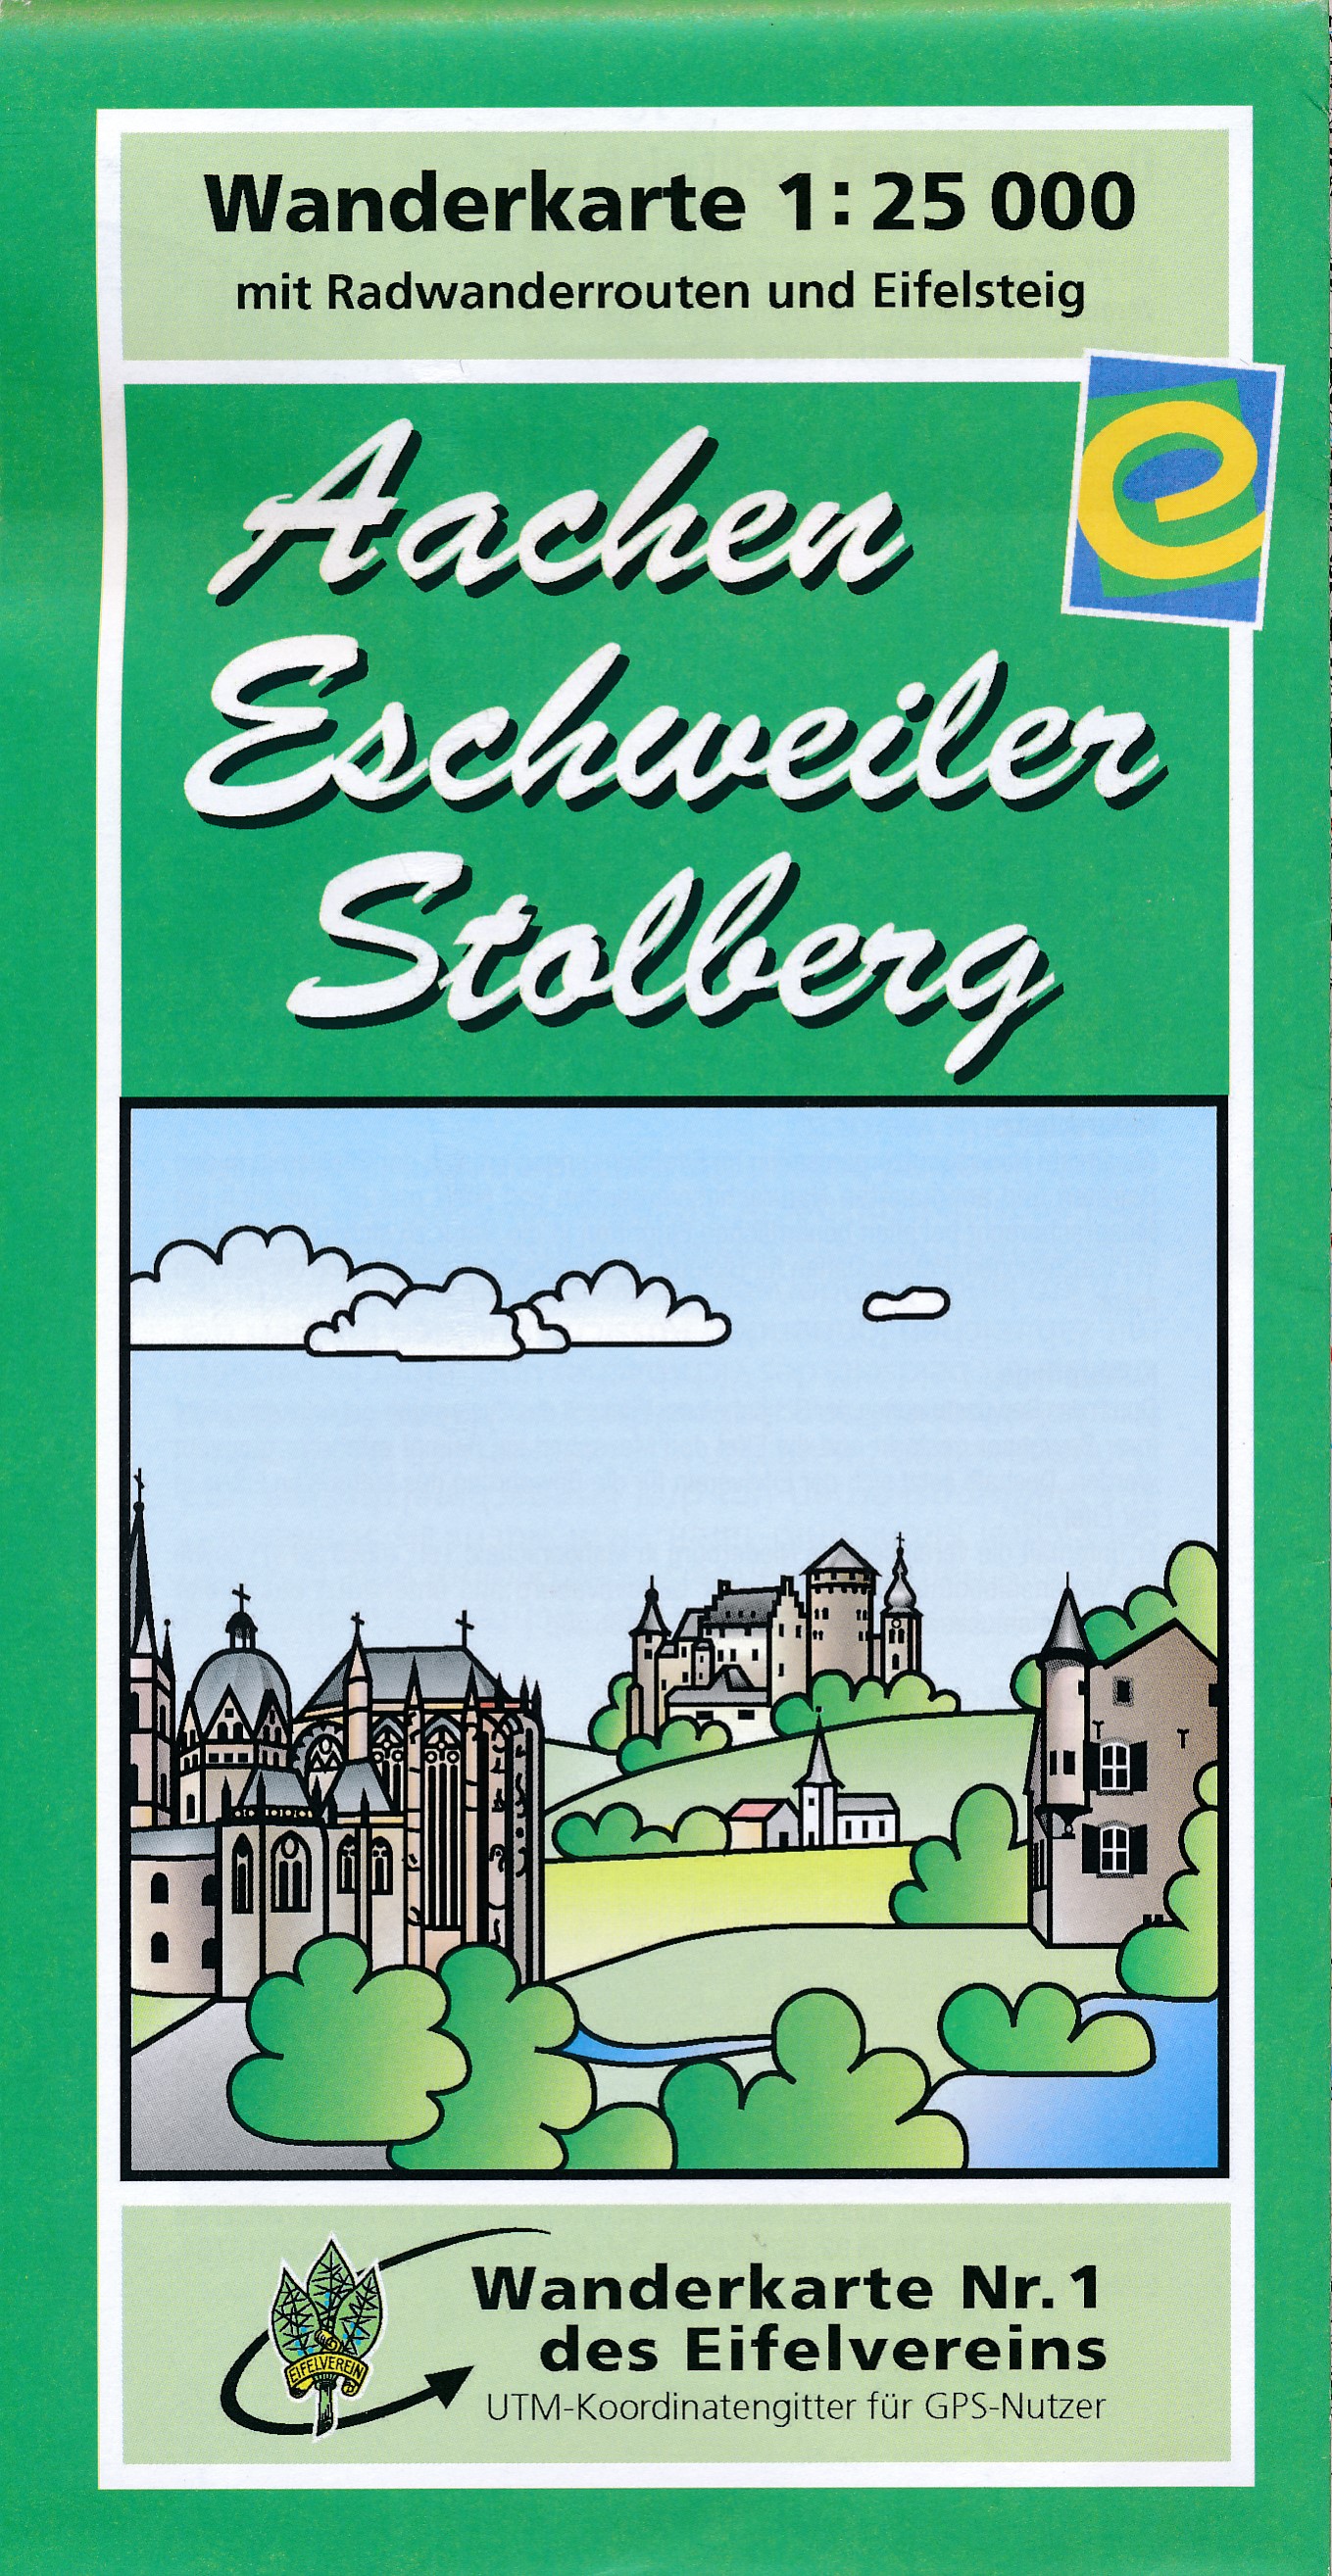 Online bestellen: Wandelkaart 01 Aachen, Eschweiler, Stolberg - Eifel | Eifelverein